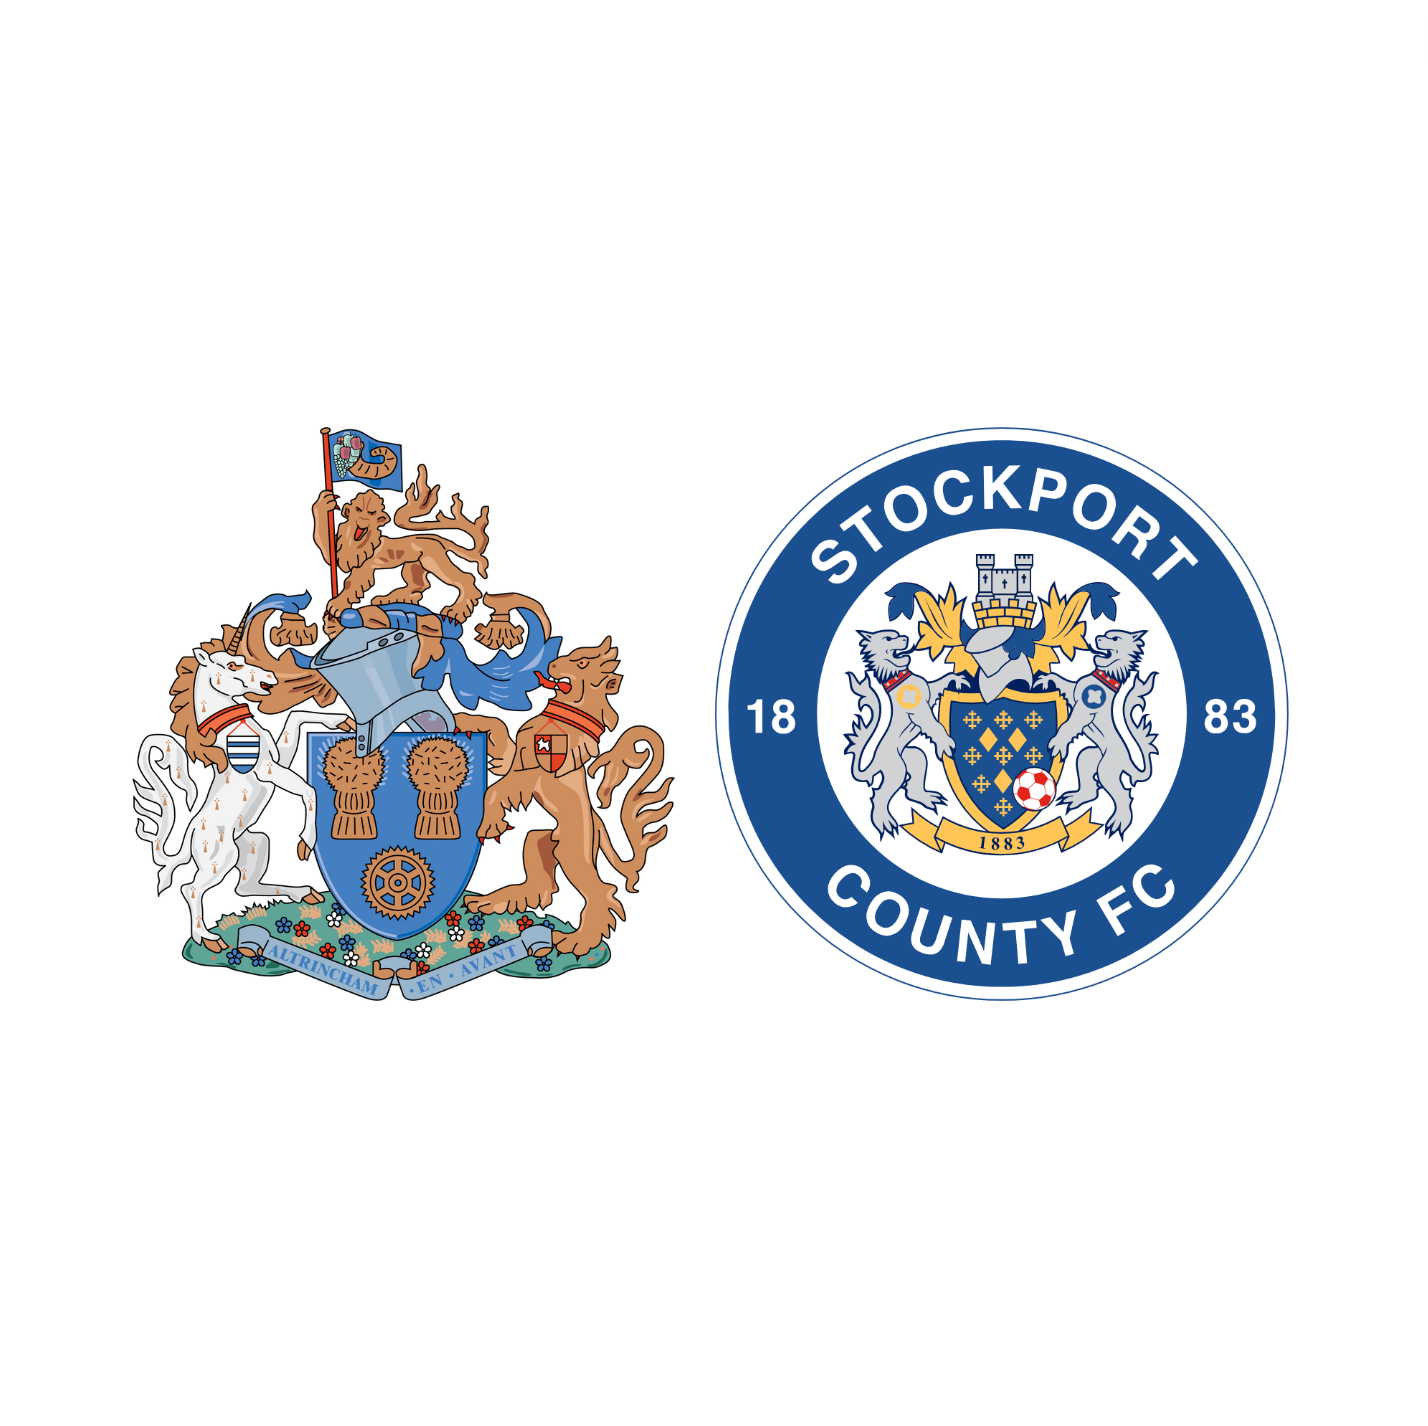 Altrincham game postponed - Stockport County